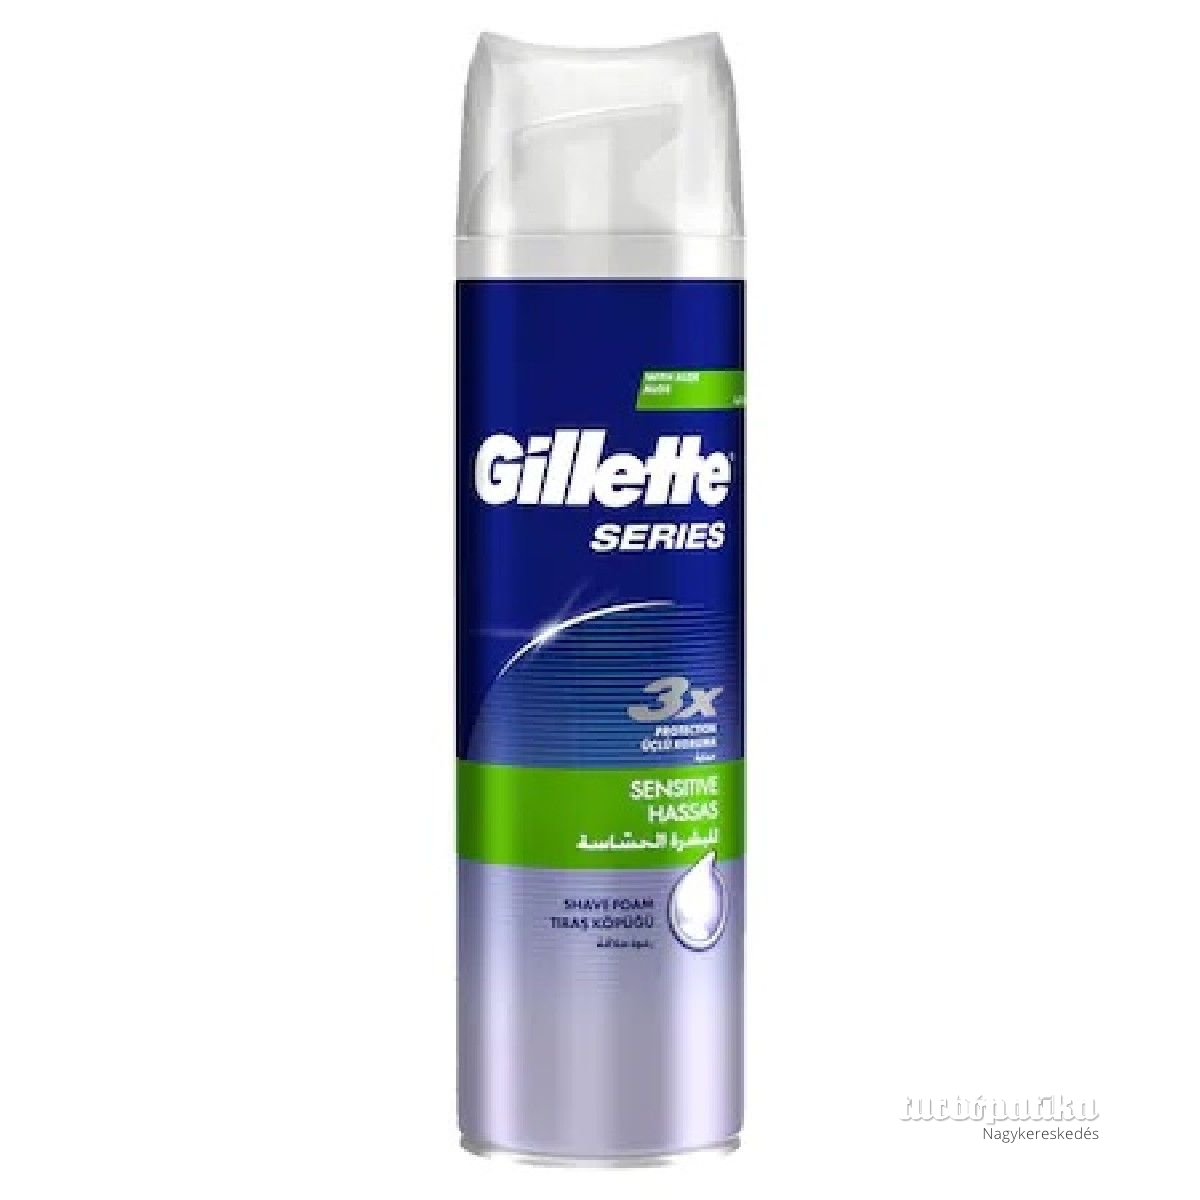  Gillette Series borotvahab 250 ml Sensitive Skin Aloe